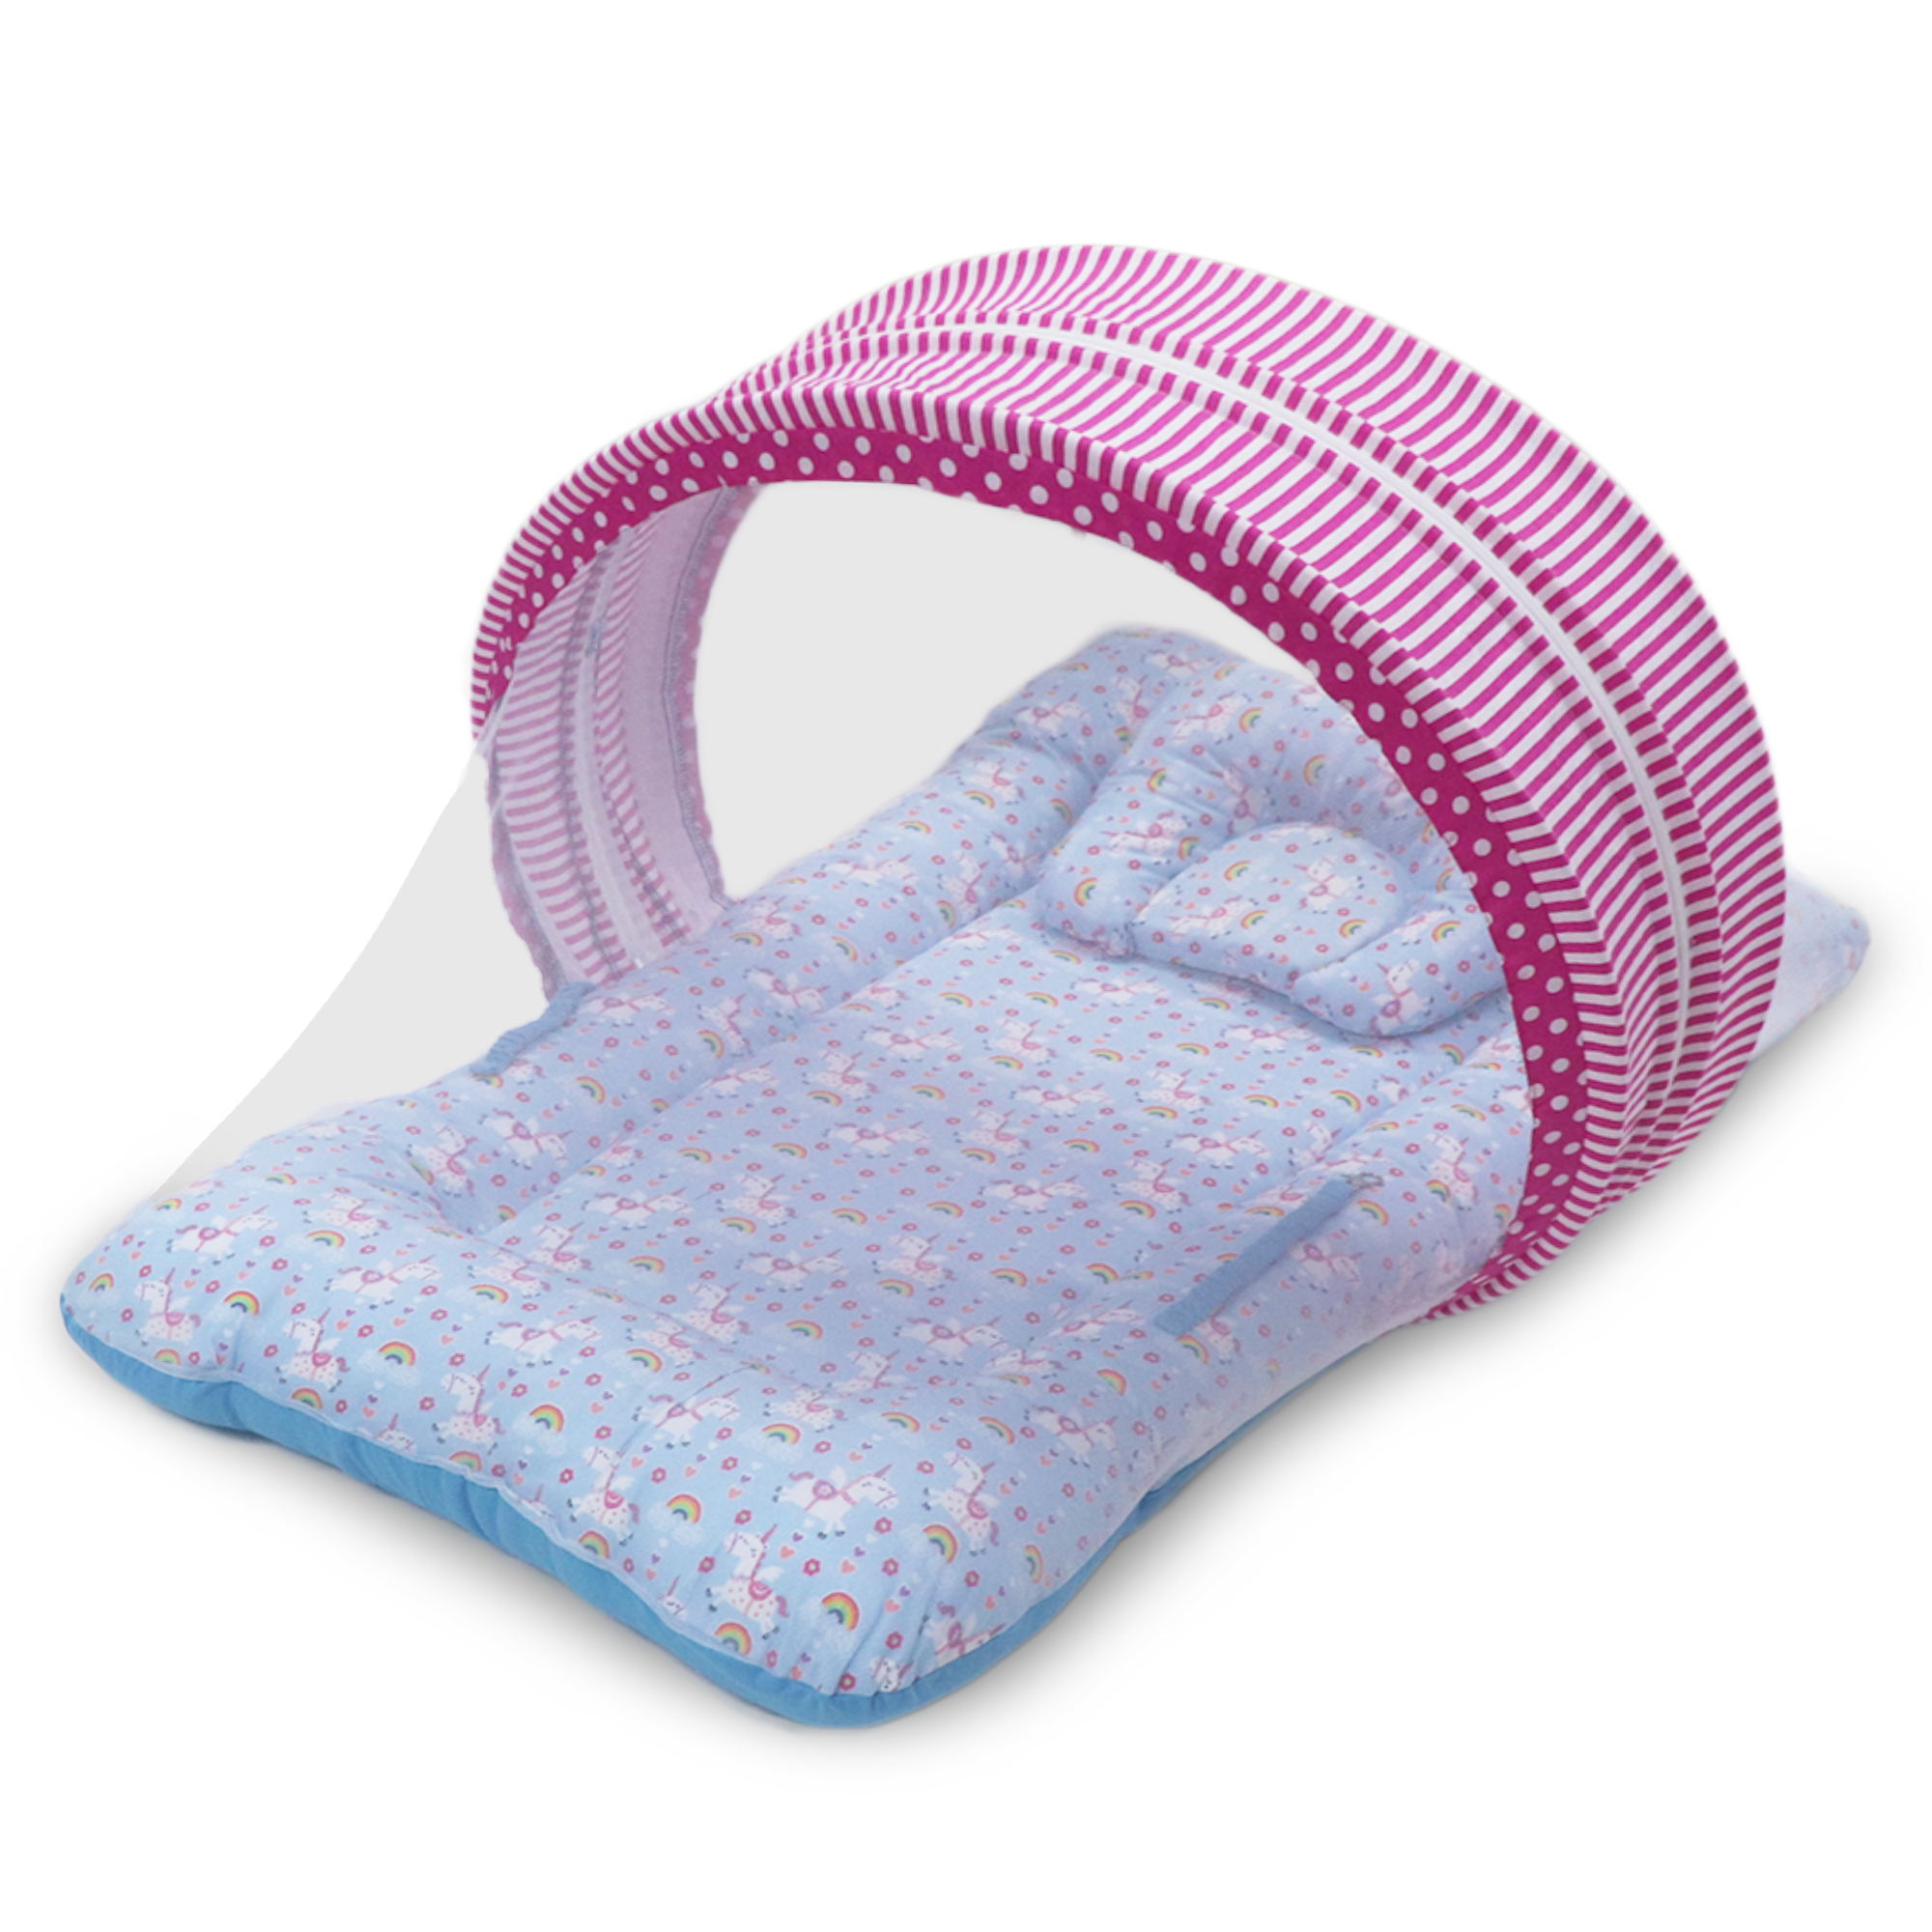 Rainbow Unicorn -  Kradyl Kroft Bassinet Style Mosquito Net Bedding for Infants